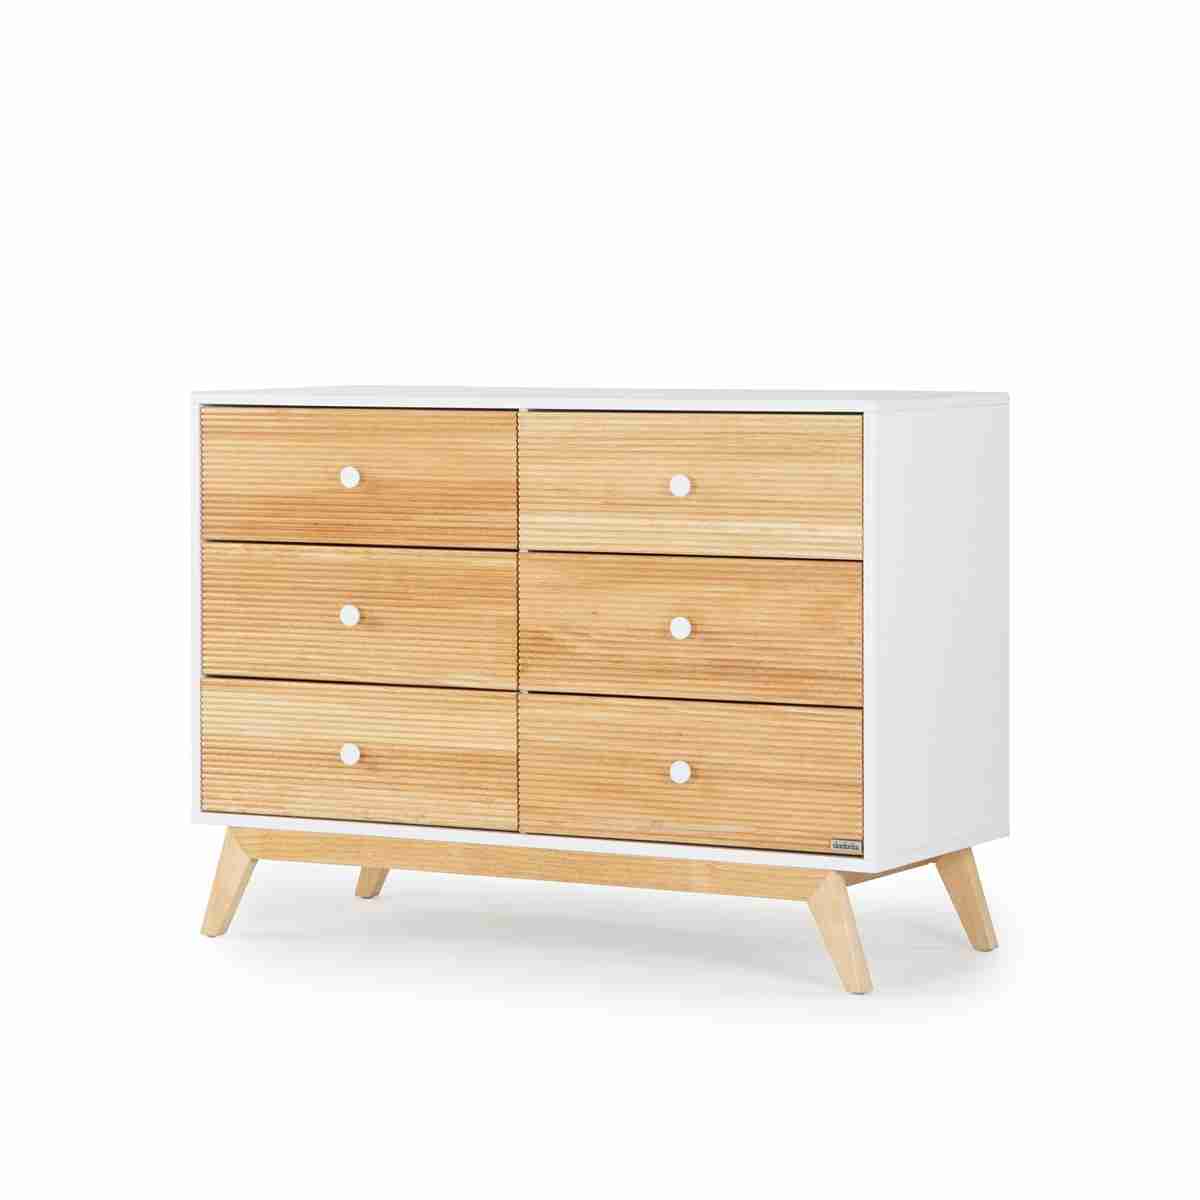 DaDaDa Merry 6-Drawer Dresser, White/Natural, 7290019952152 -- ANB Baby